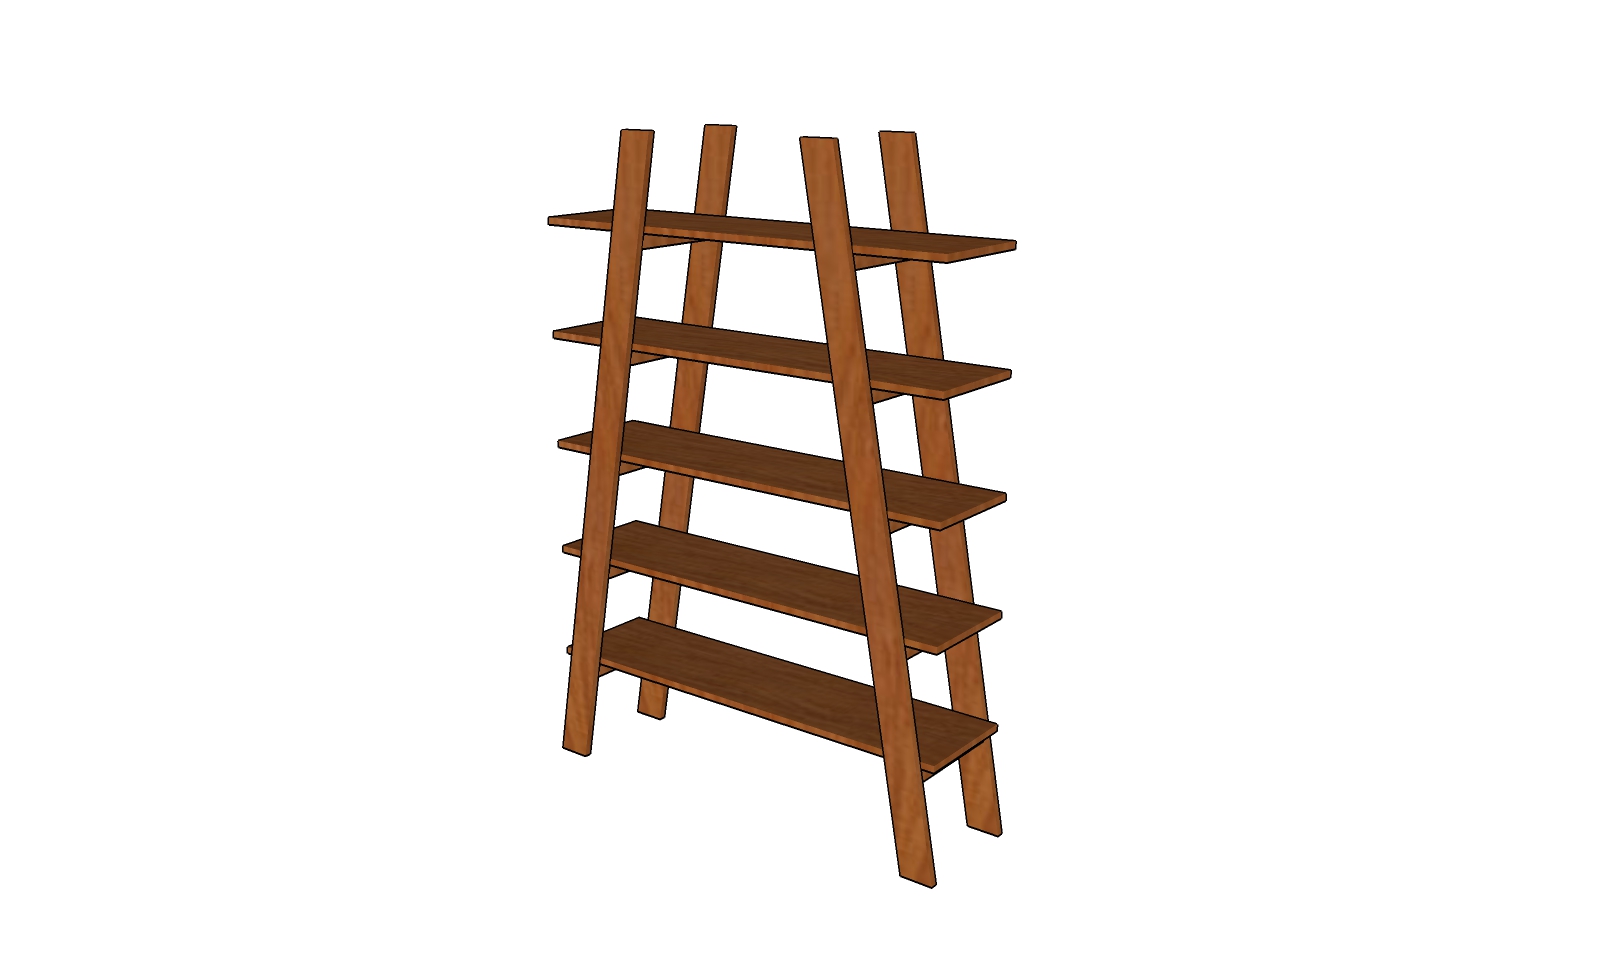 ladder shelf plans